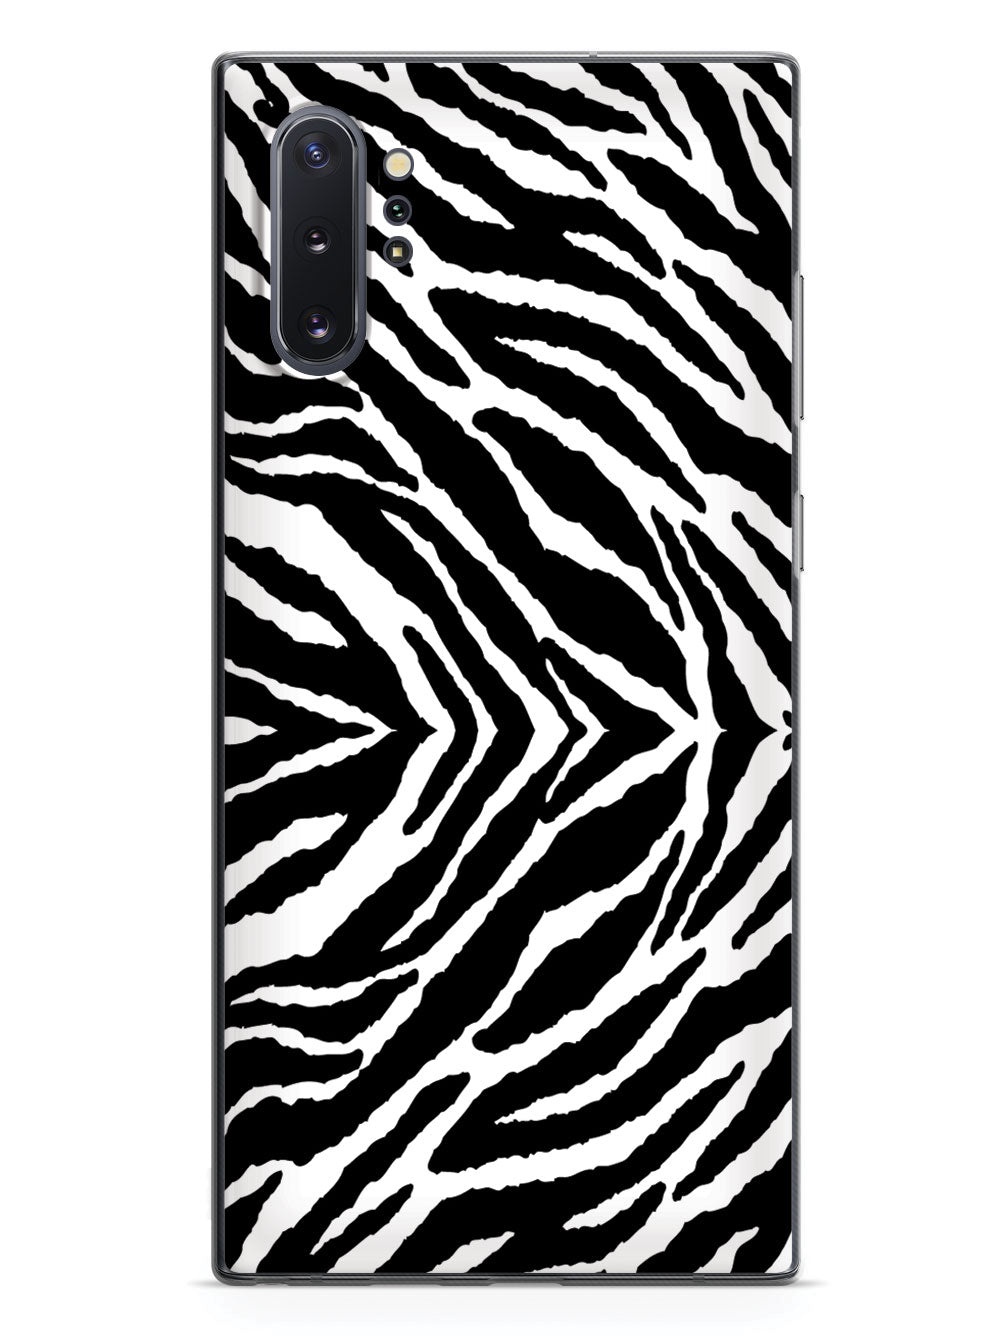 Zebra Animal Print Pattern Case